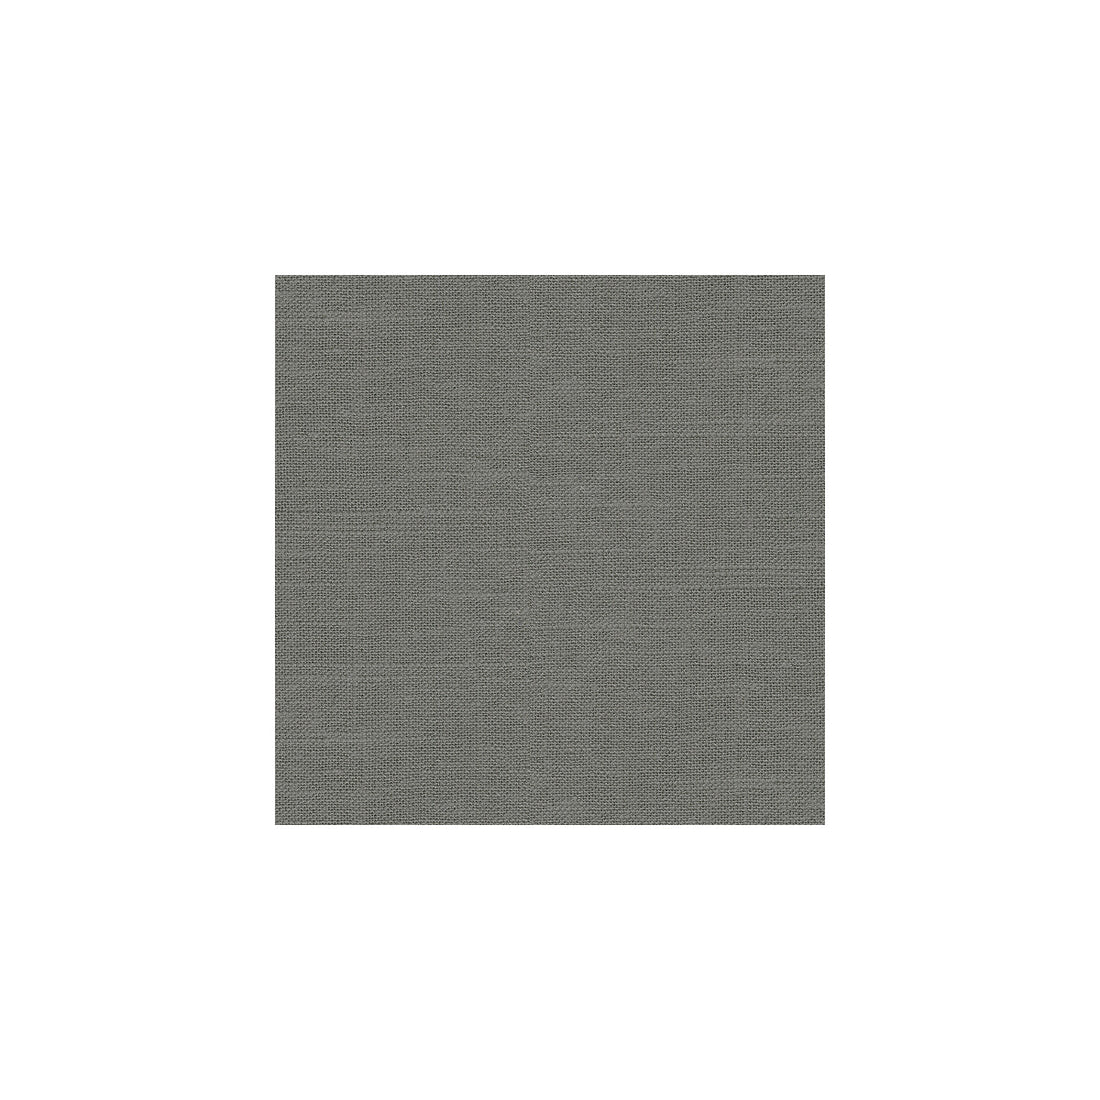 Barnegat fabric in ash color - pattern 24573.311.0 - by Kravet Basics